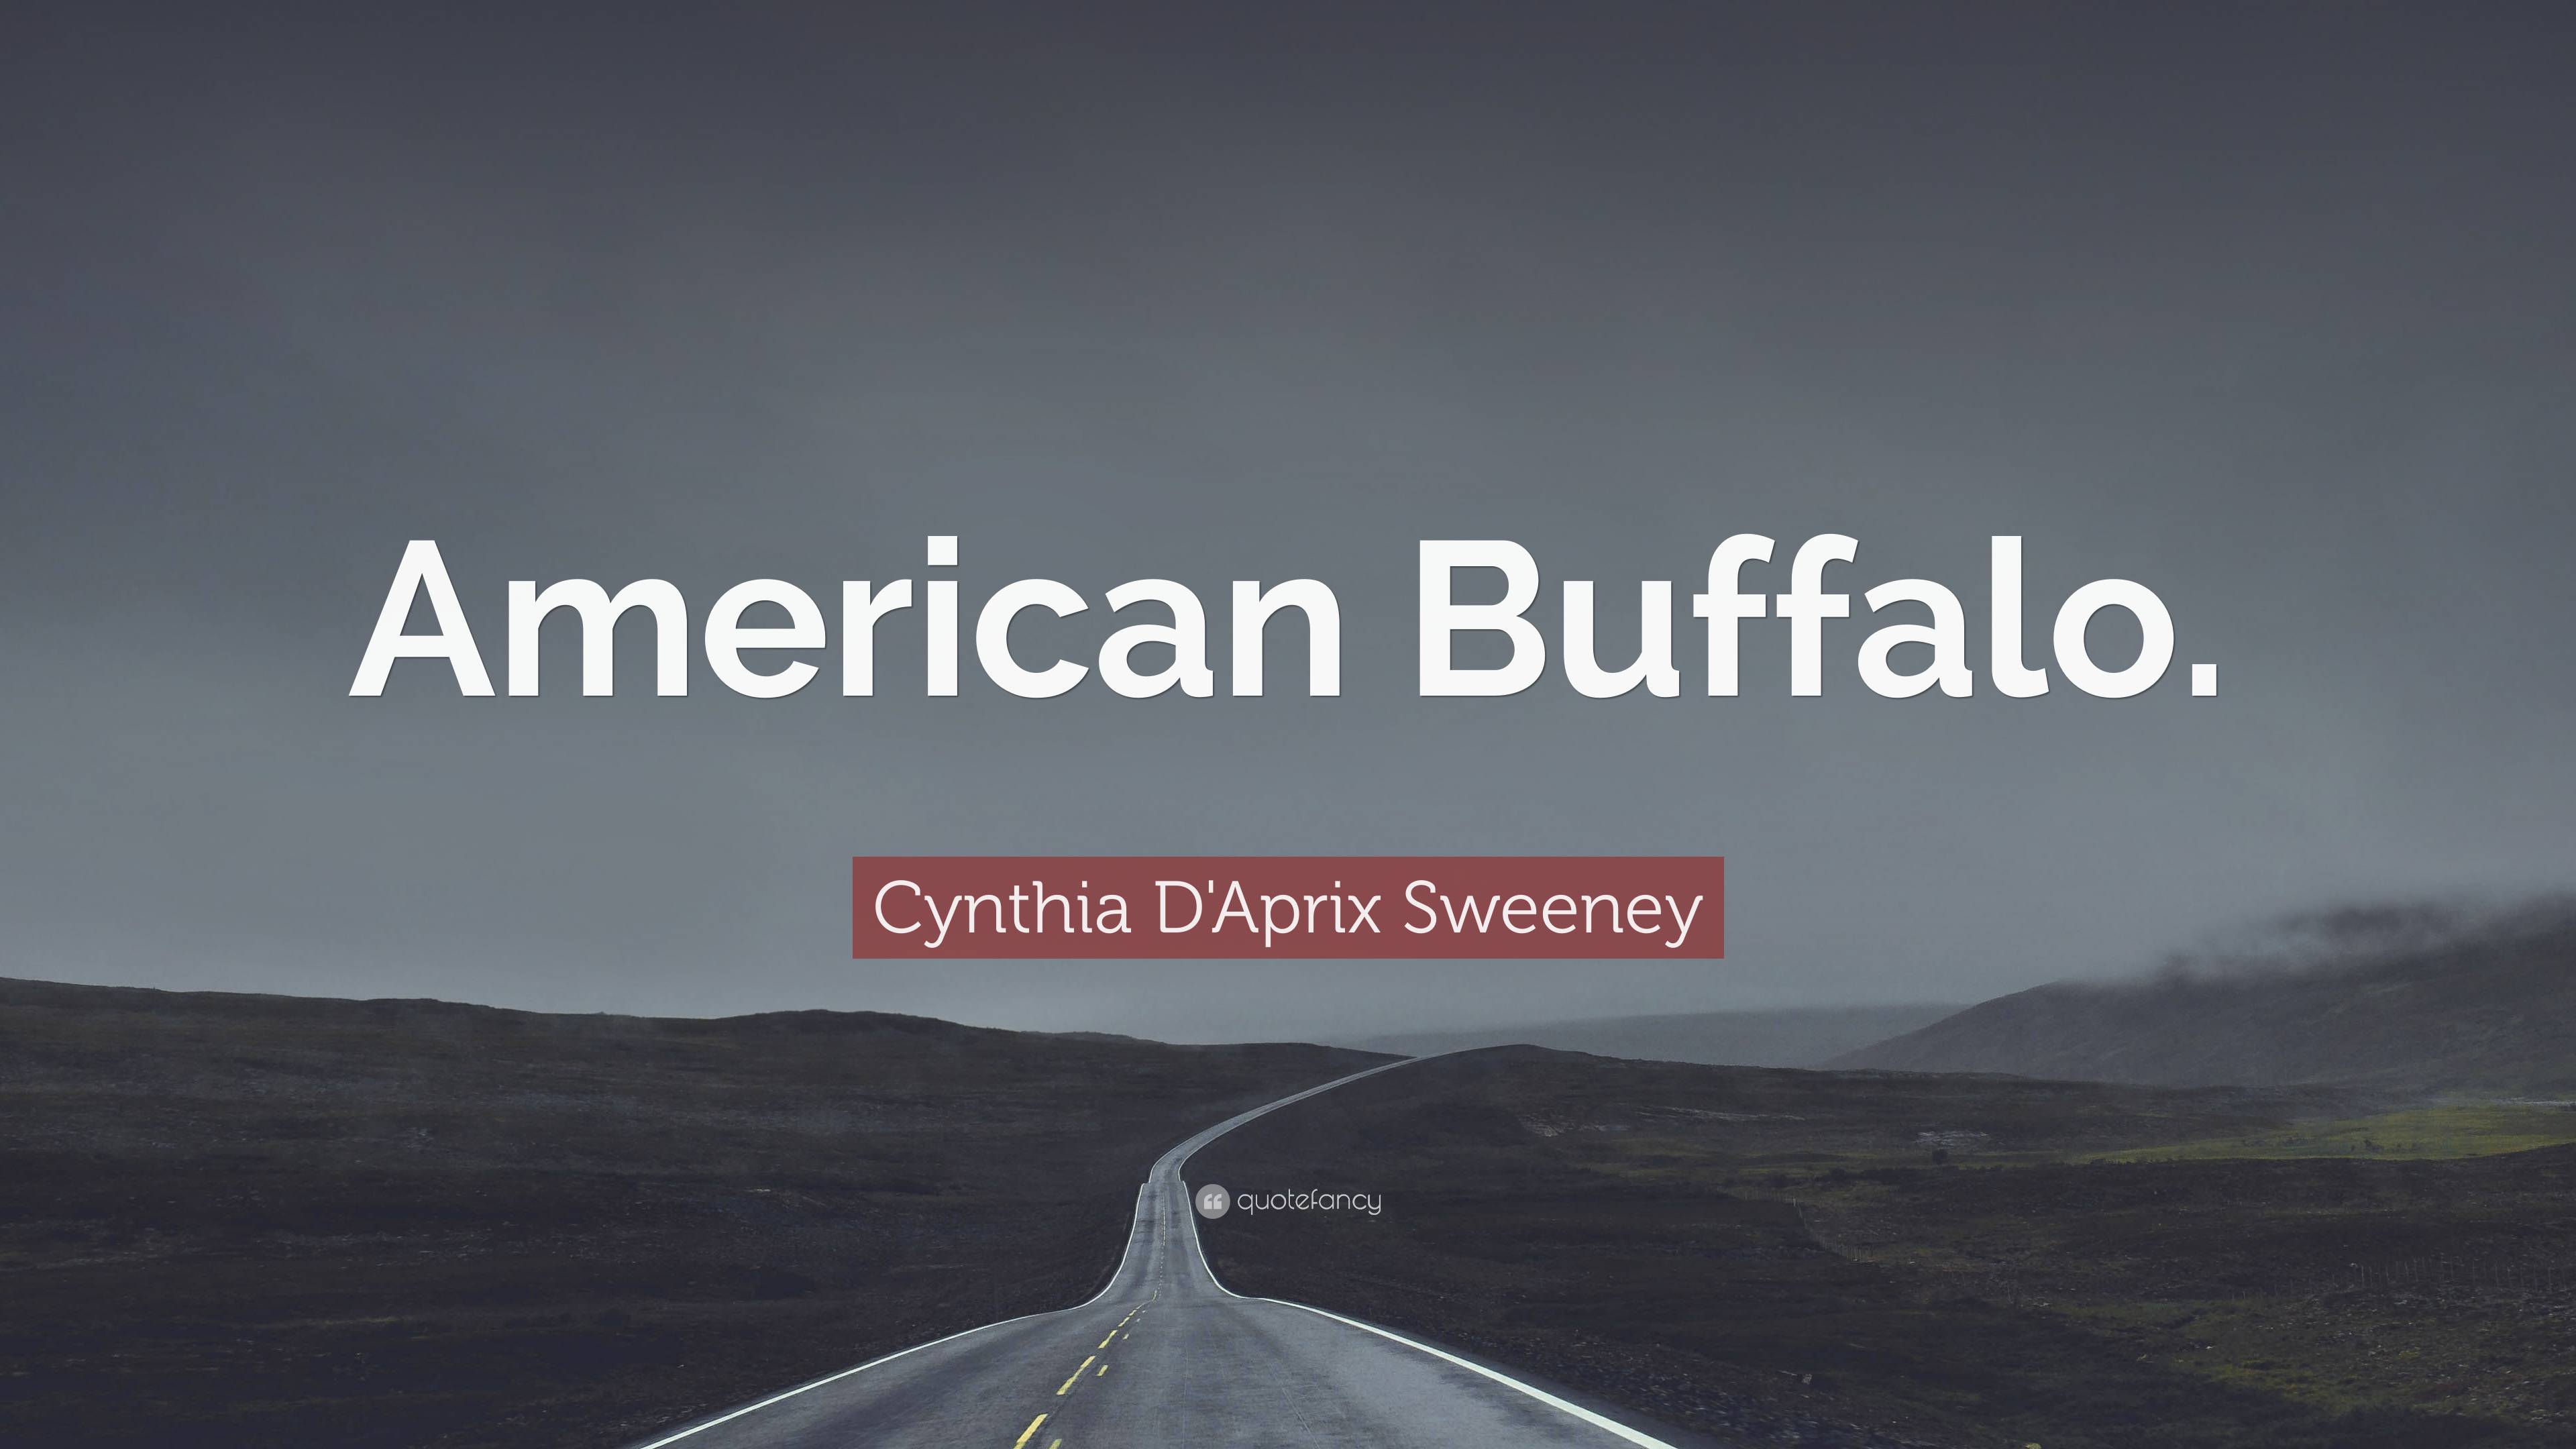 Cynthia D'Aprix Sweeney Quote: “American Buffalo.”